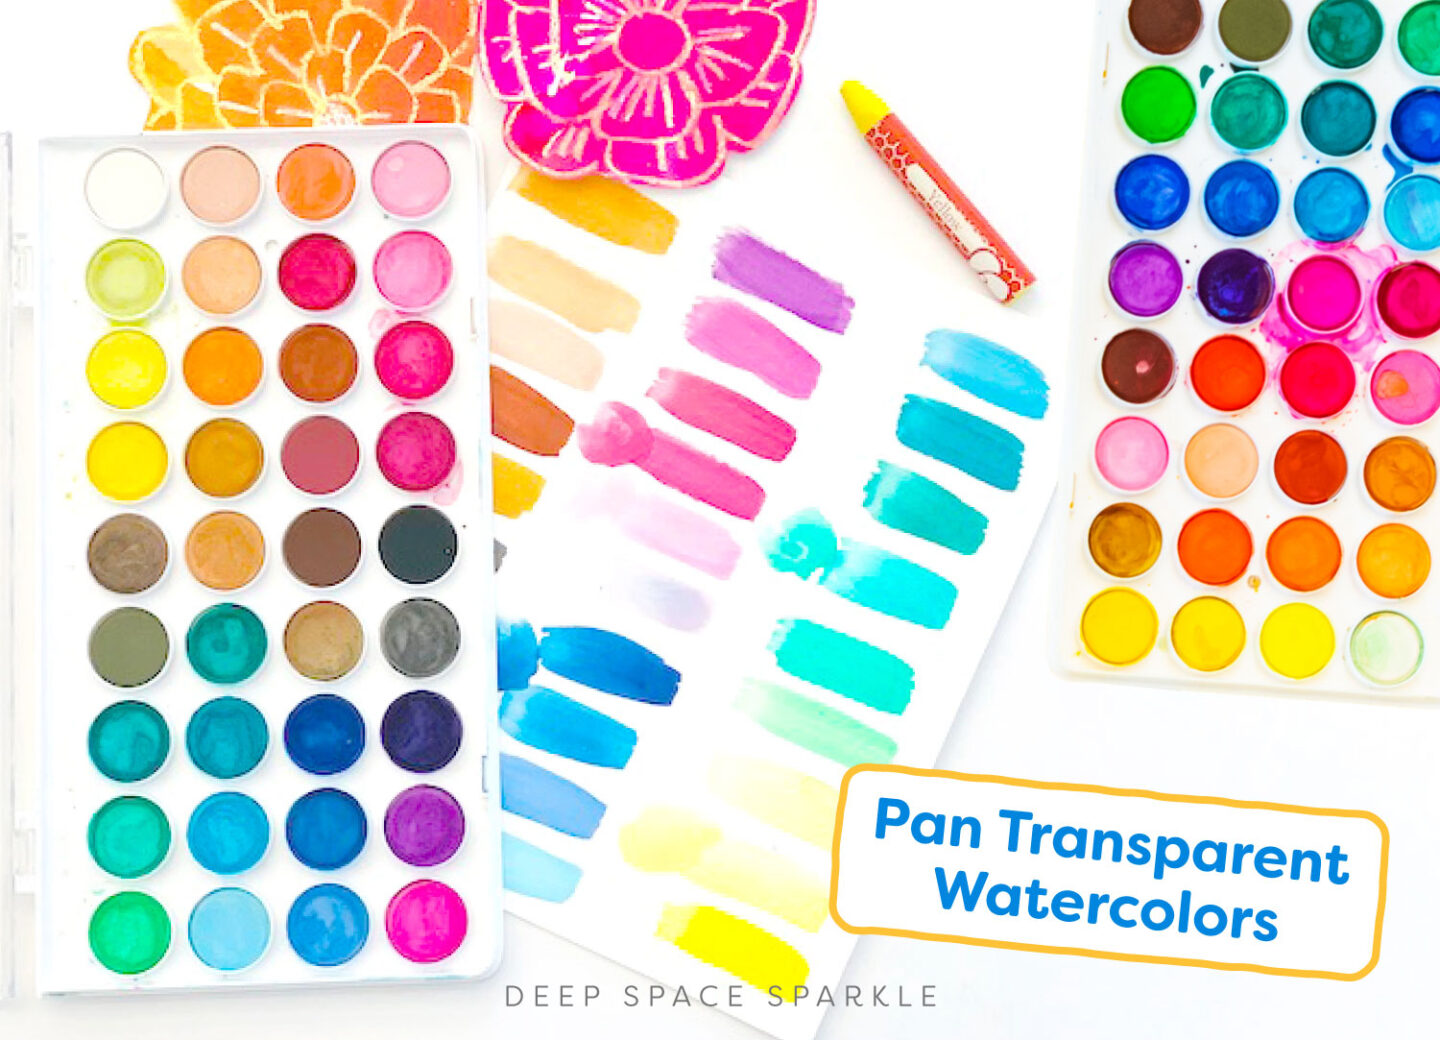 https://www.deepspacesparkle.com/wp-content/uploads/2019/07/Pan-Transparent-The-Top-5-Watercolor-Colored-Pencil-and-Crayon-Sets-for-Kids-1440x1040.jpg